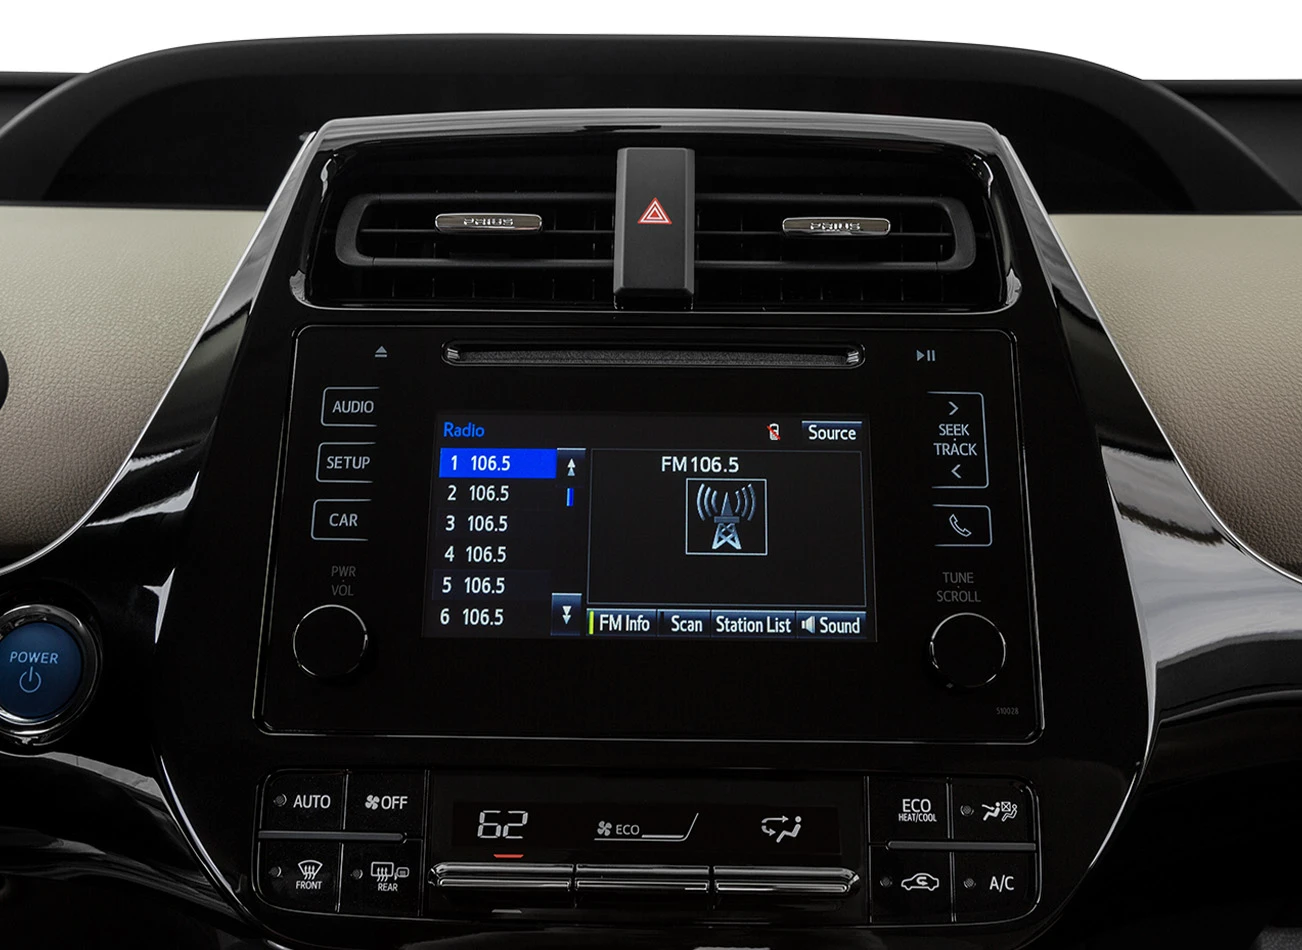 2017 Toyota Prius Review: Entertainment display screen | CarMax